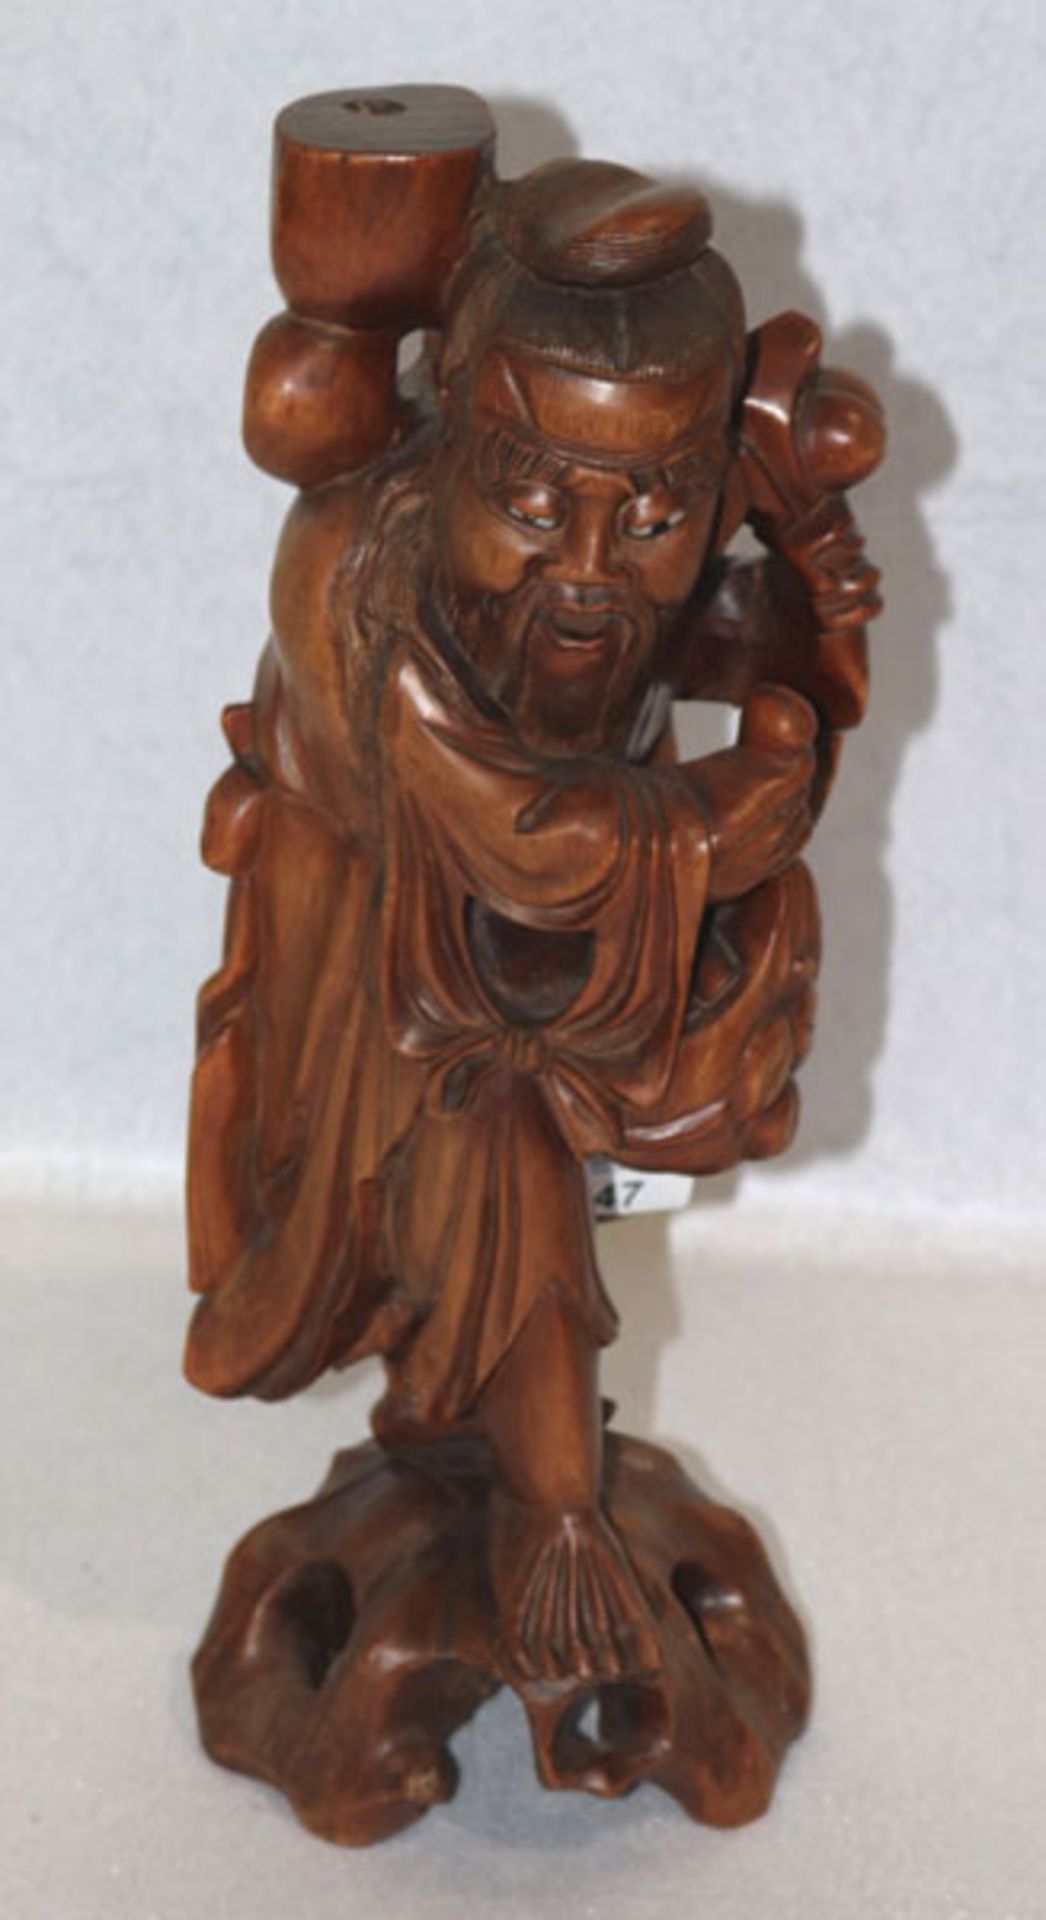 Holz Figurenskulptur 'Chinesischer Bauer', Holzsockel hat Riss, H 37 cm